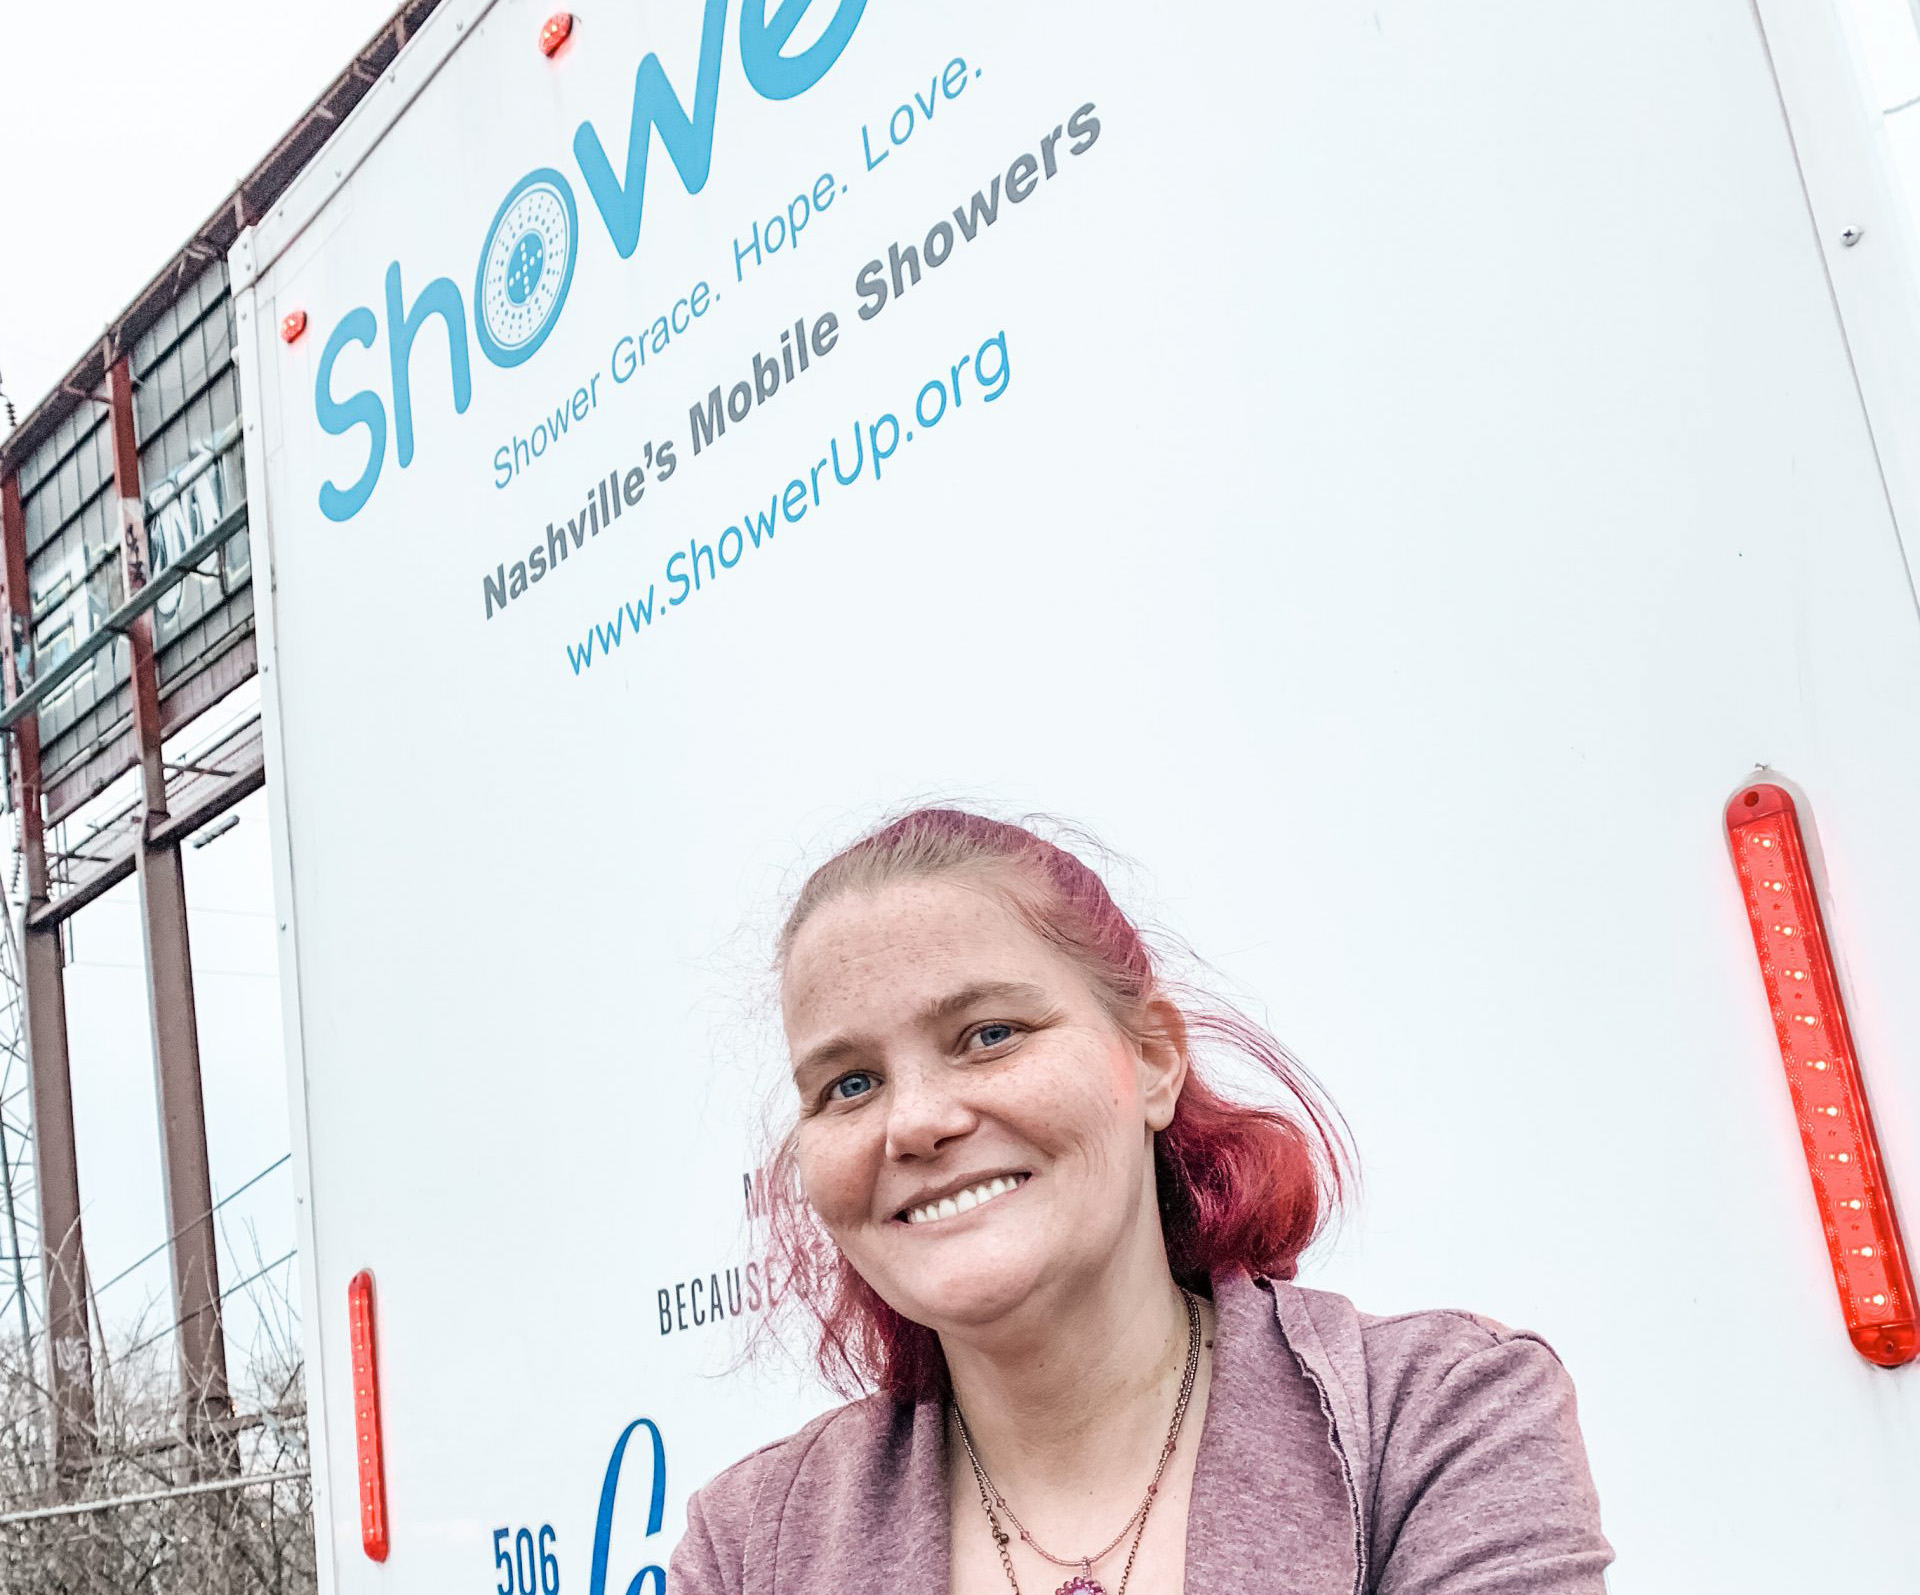 Woman smiling in front of Nashville Shower Up mobile shower unit